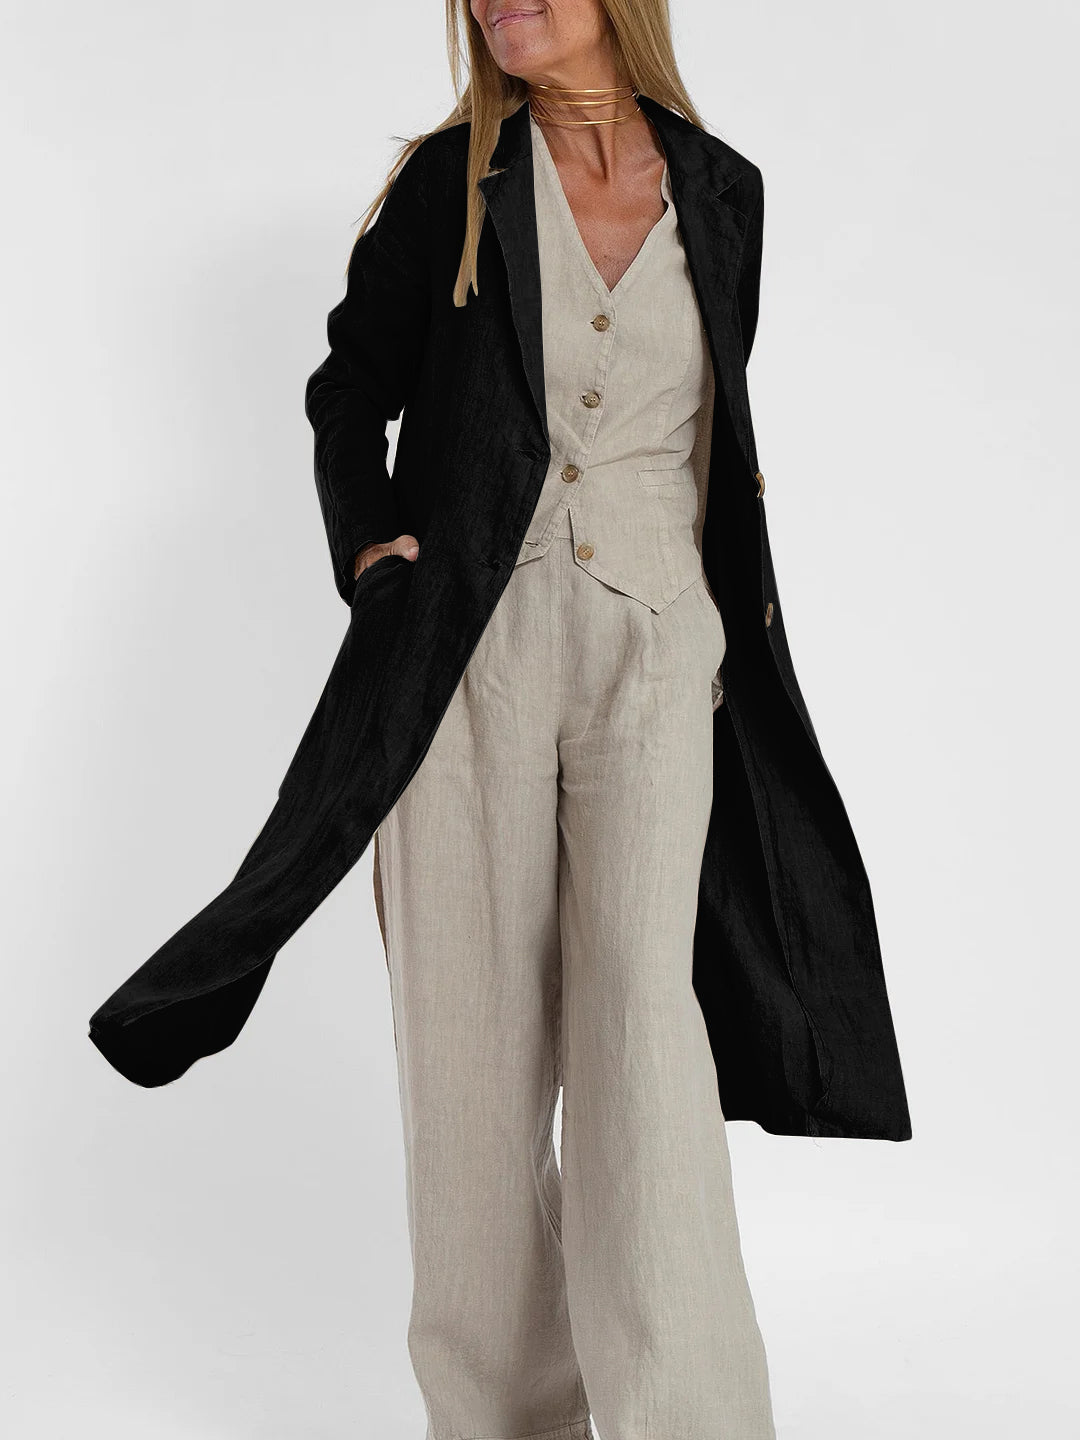 NTG Fad Blazers & Jackets Black / S Cotton Linen Suit Collar Pocket Jacket